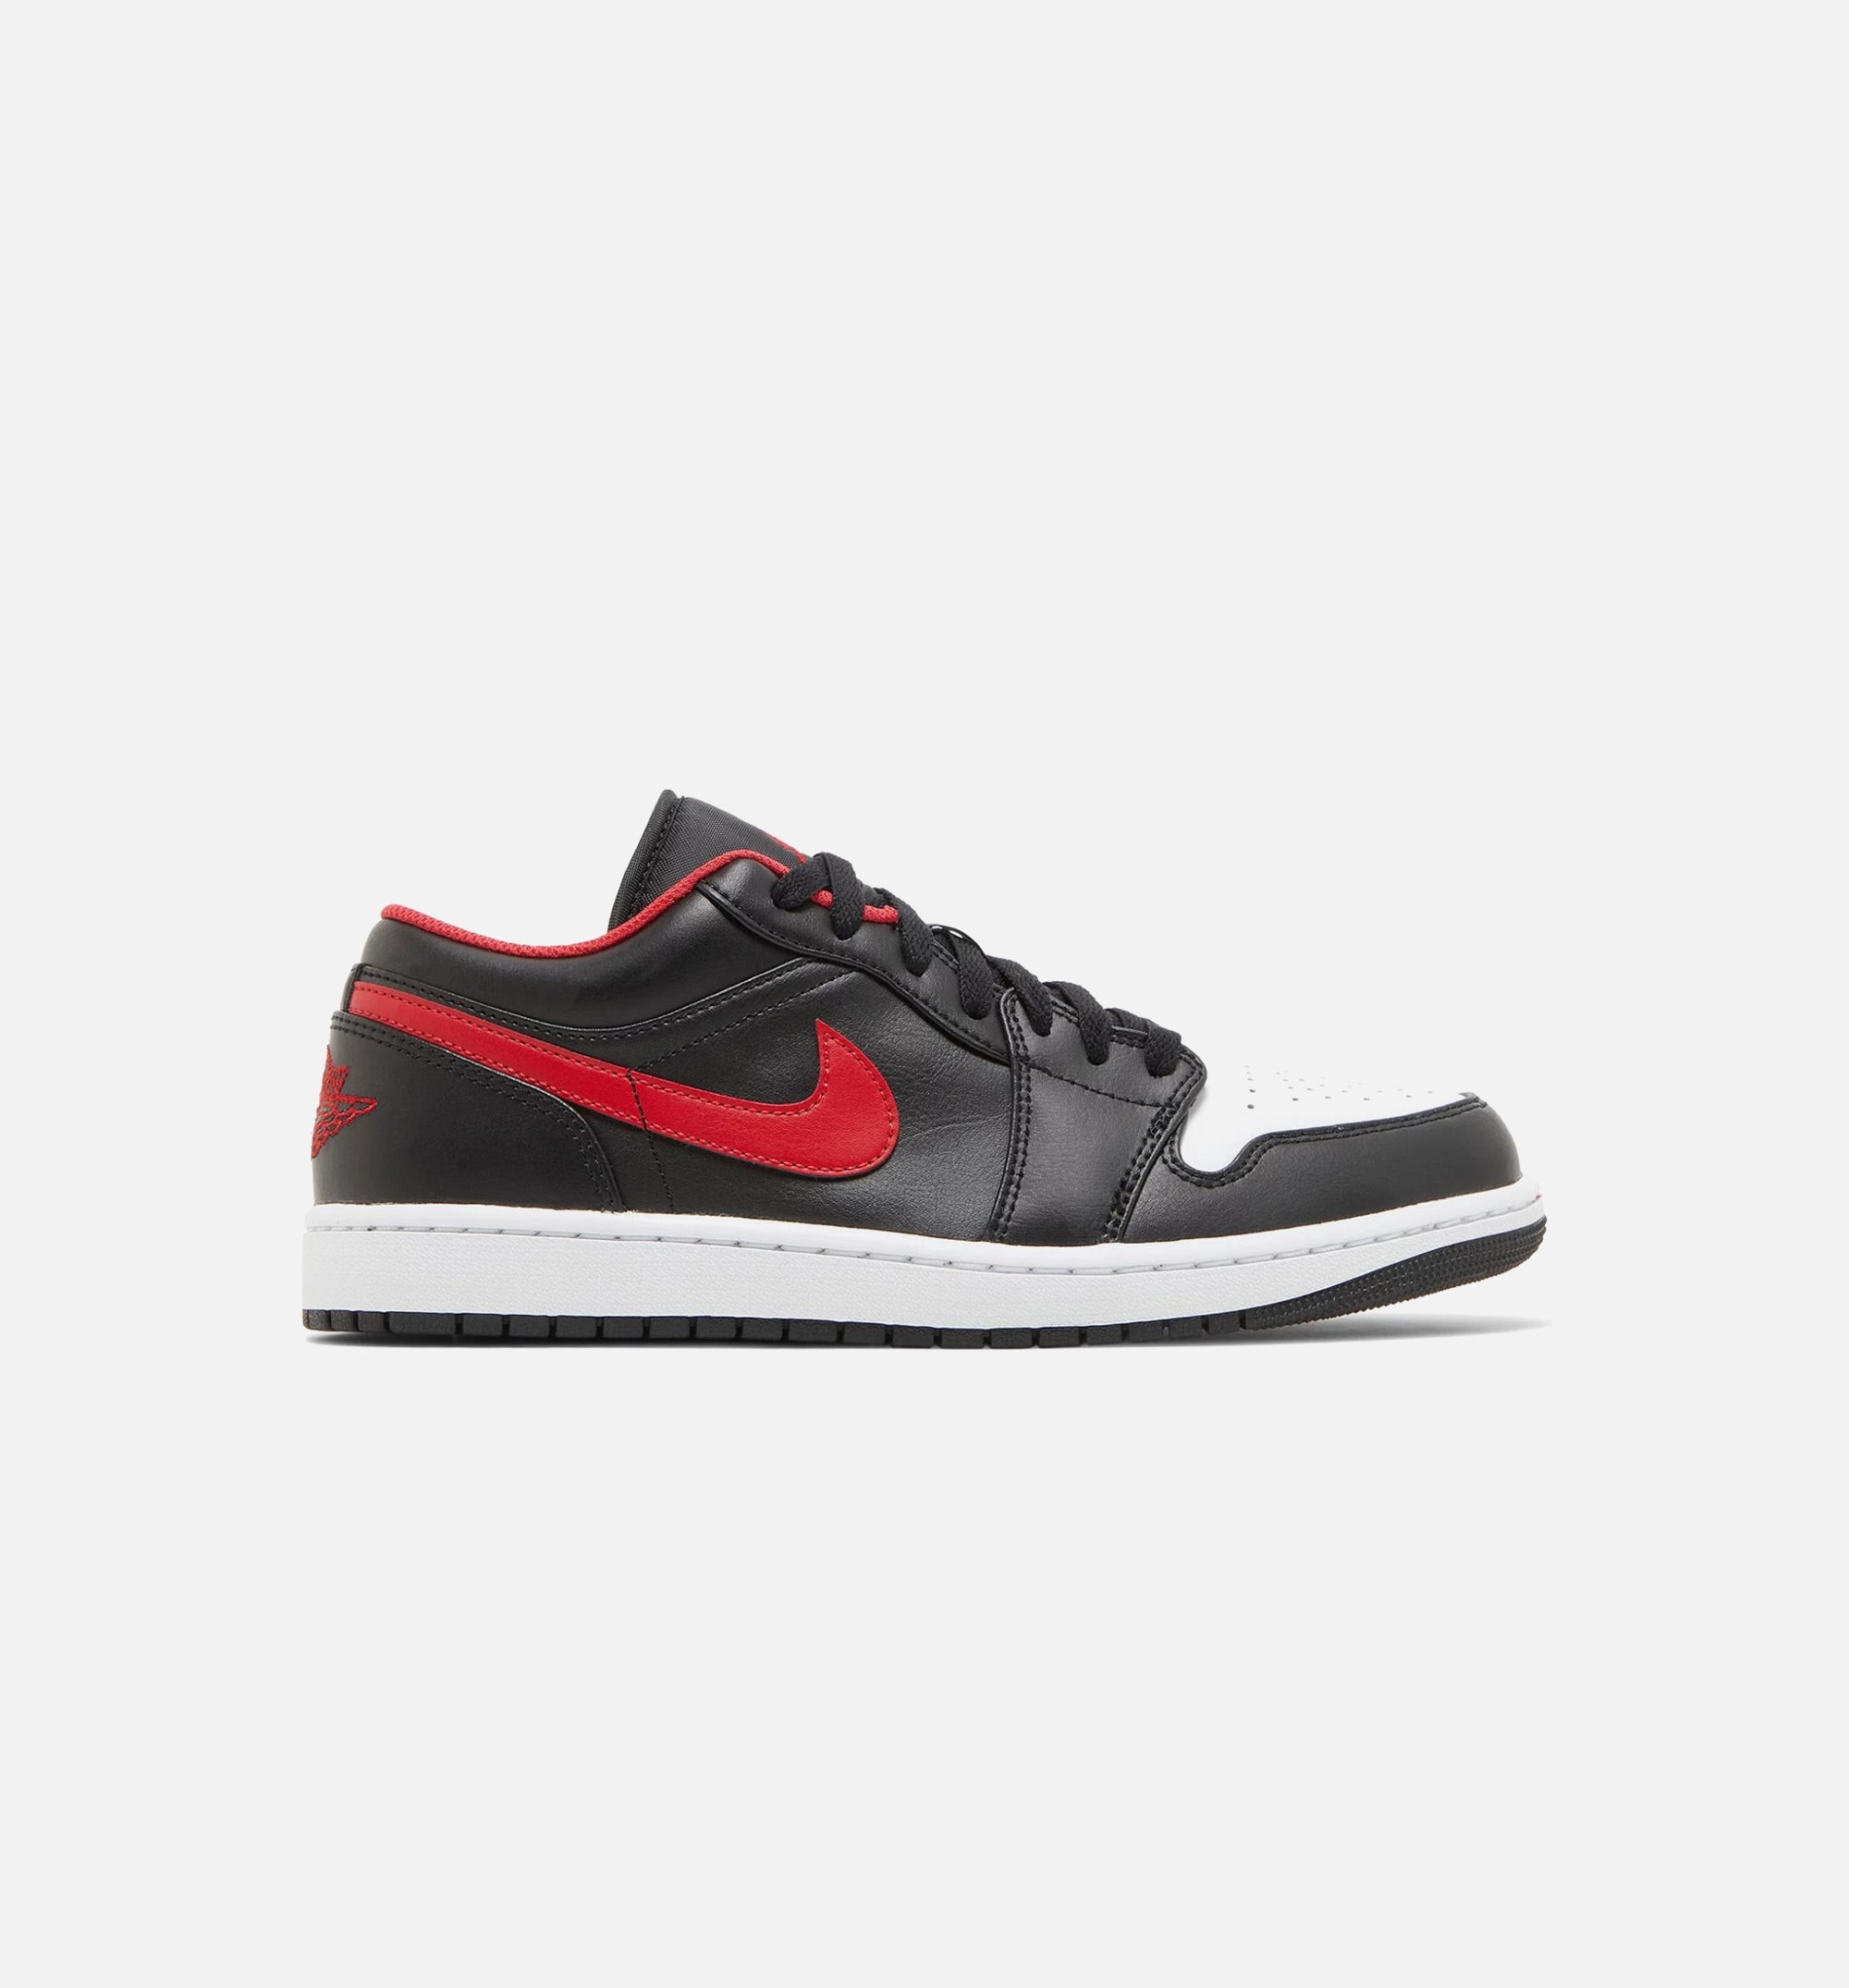 Air Jordan 1 Low White Toe Mens Lifestyle Shoe - Black/Red